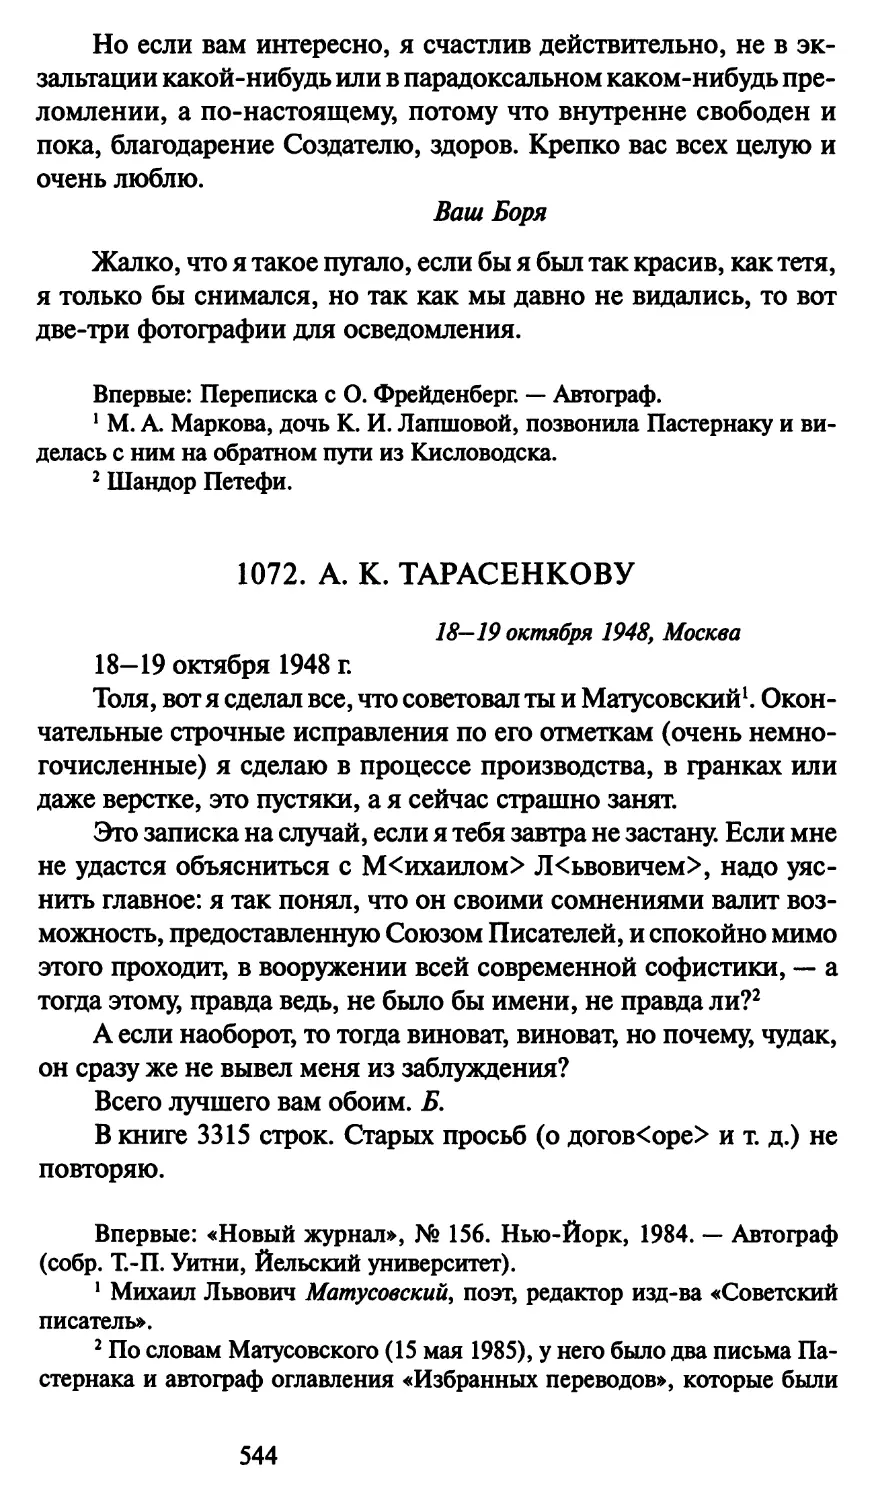 1072. А. К. Тарасенкову 18-19 октября 1948